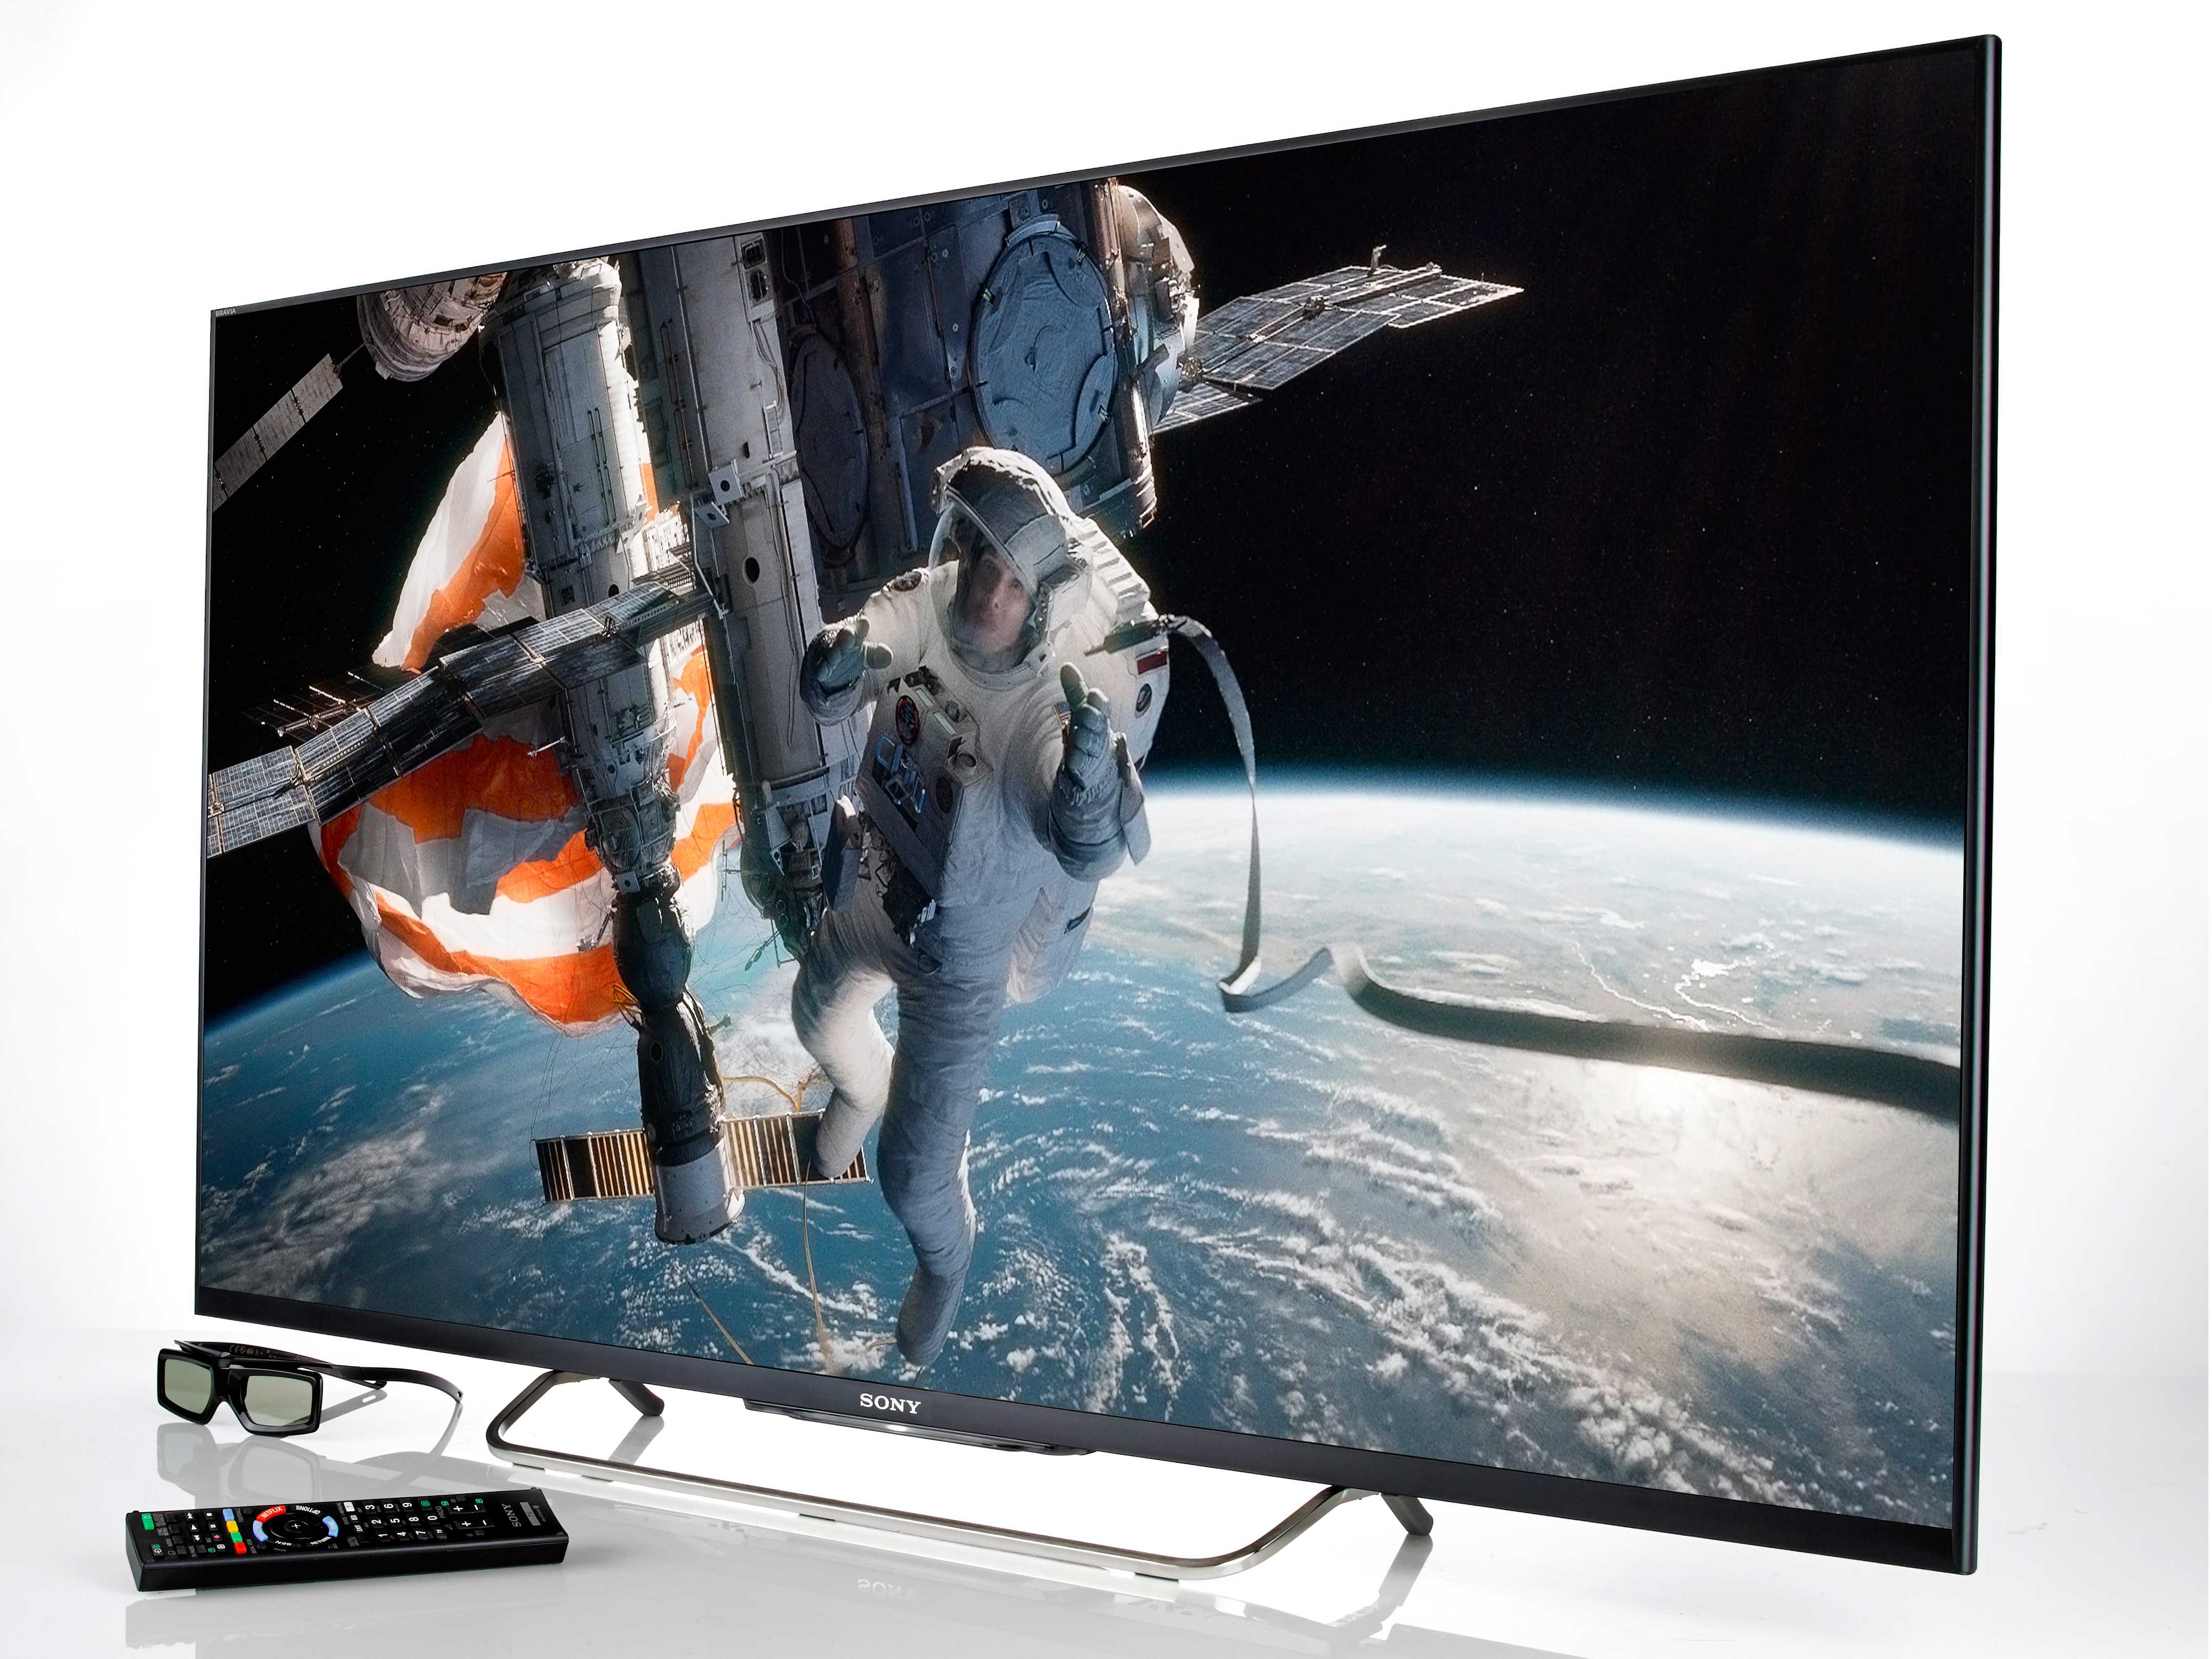 Sony kdl-50w829b - купить  в , скидки, цена, отзывы, обзор, характеристики - телевизоры